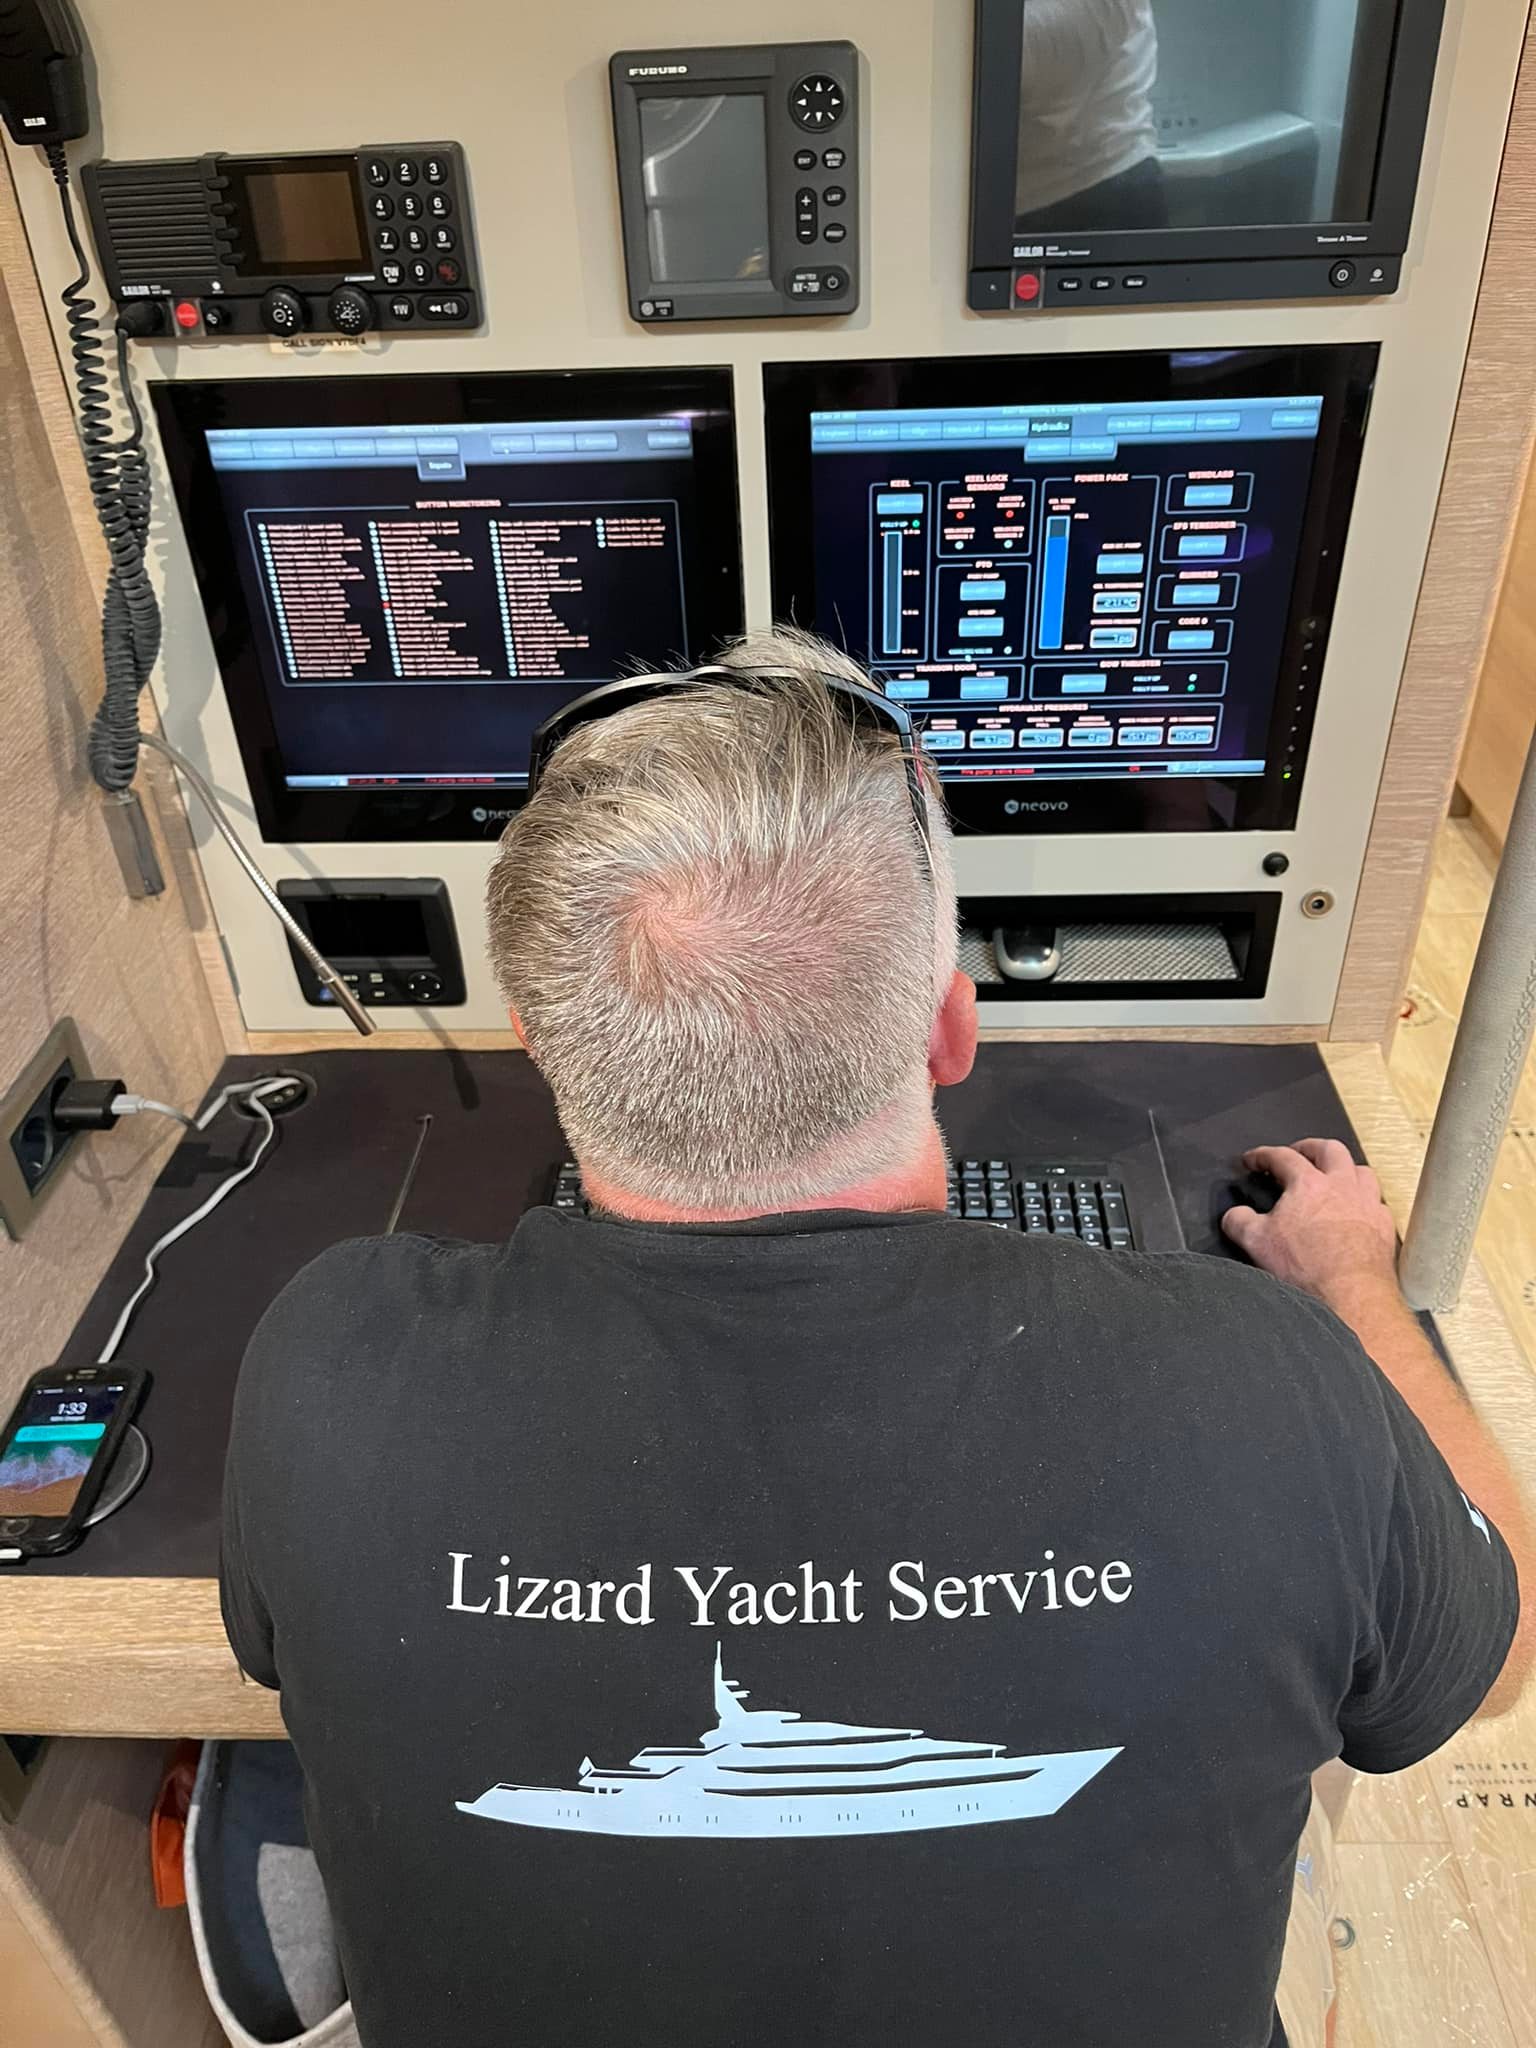 lizard yacht service ltd